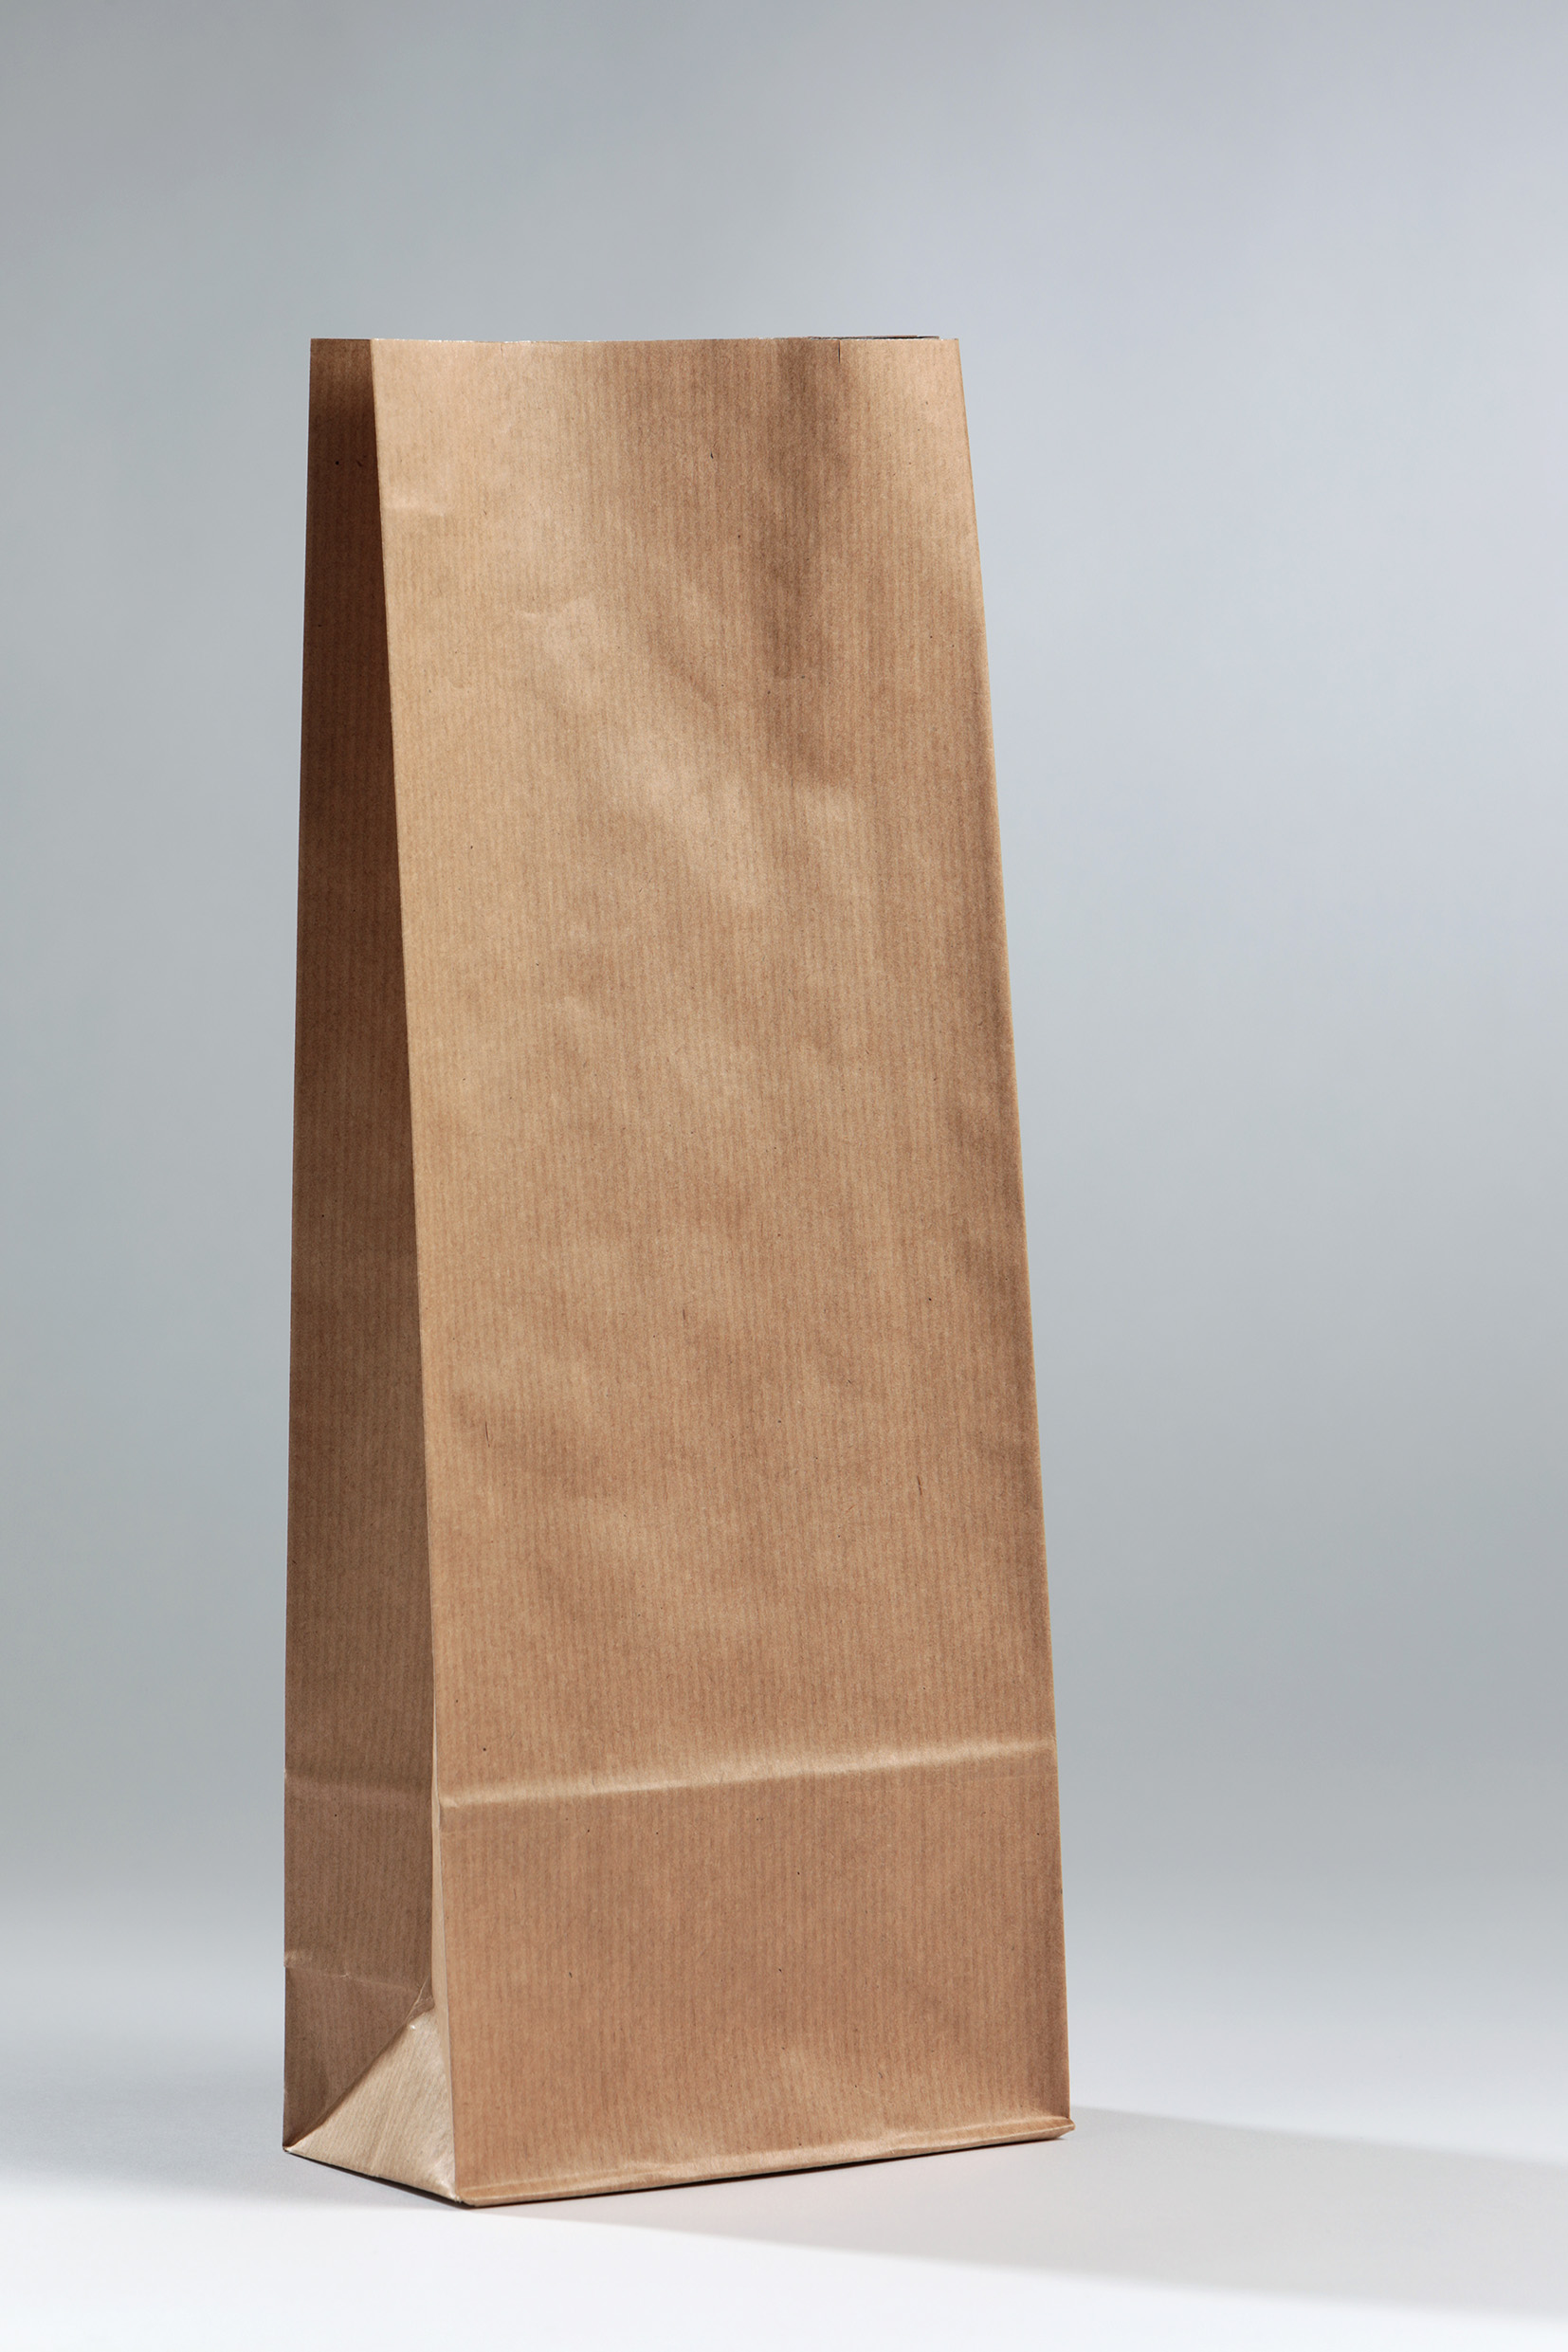 Printed and Laminated Gifting Paper Bags | | Eco Aegis